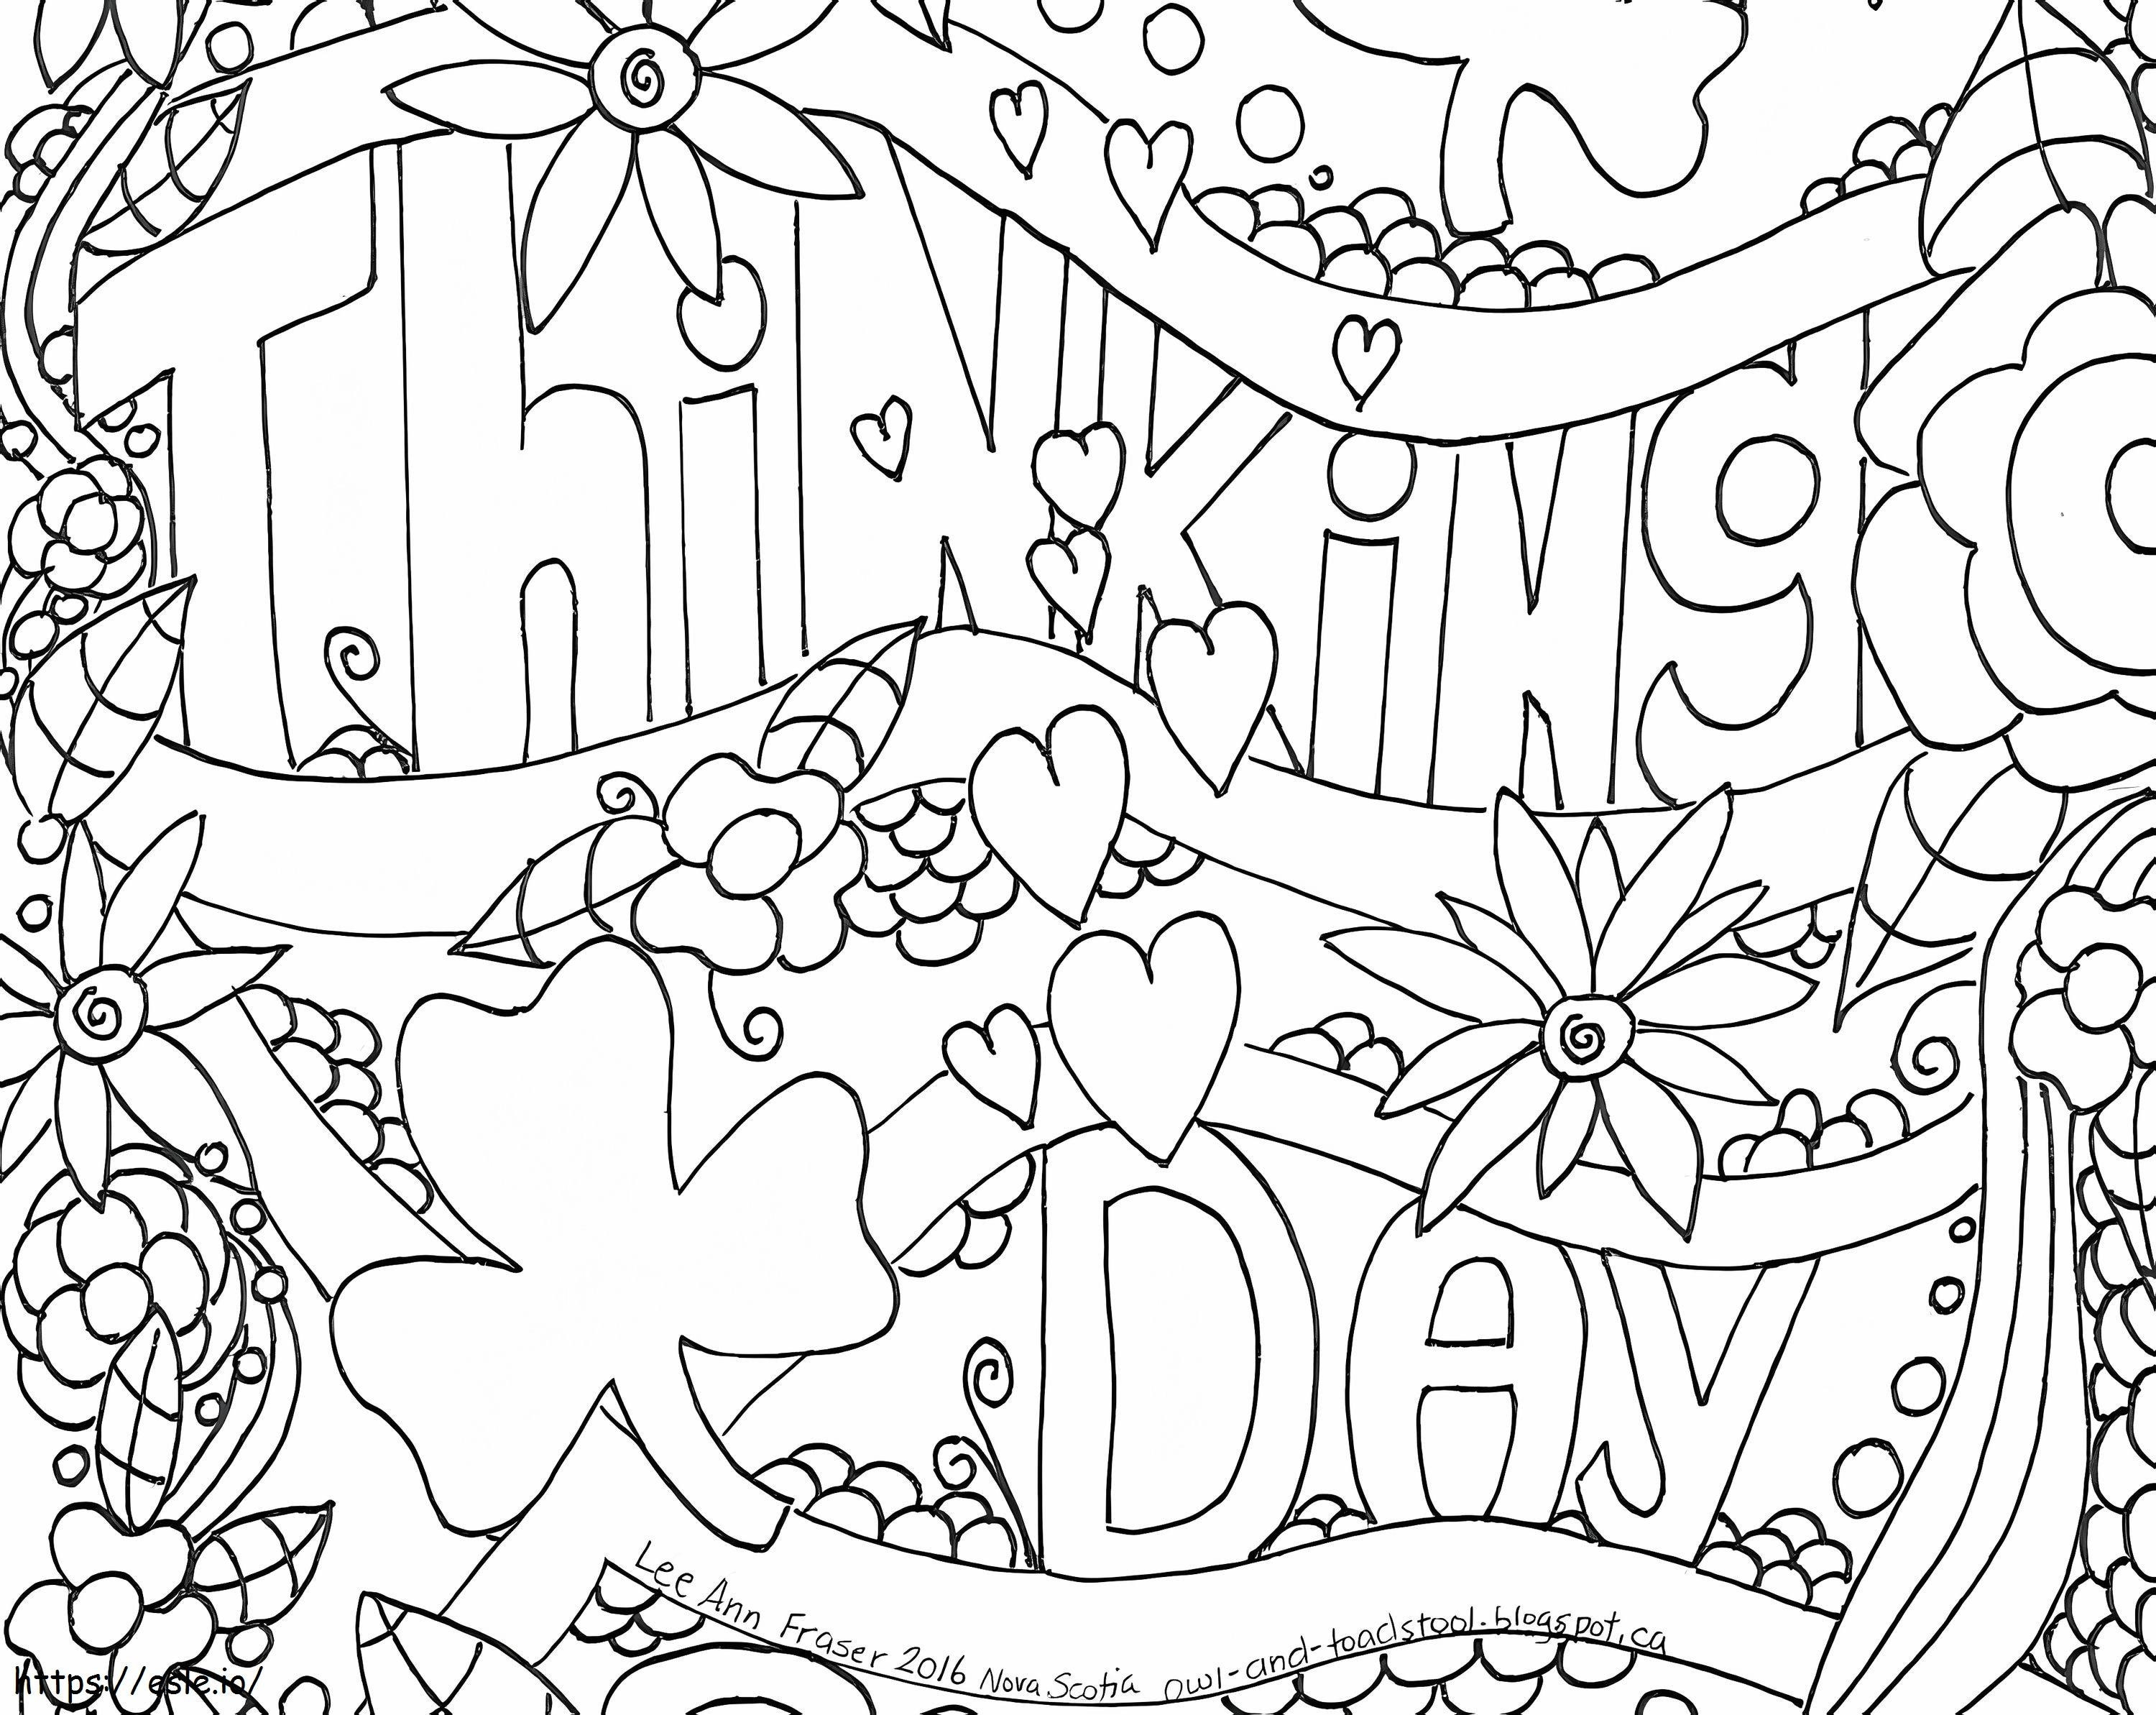 Doodle do Dia Mundial do Pensamento para colorir